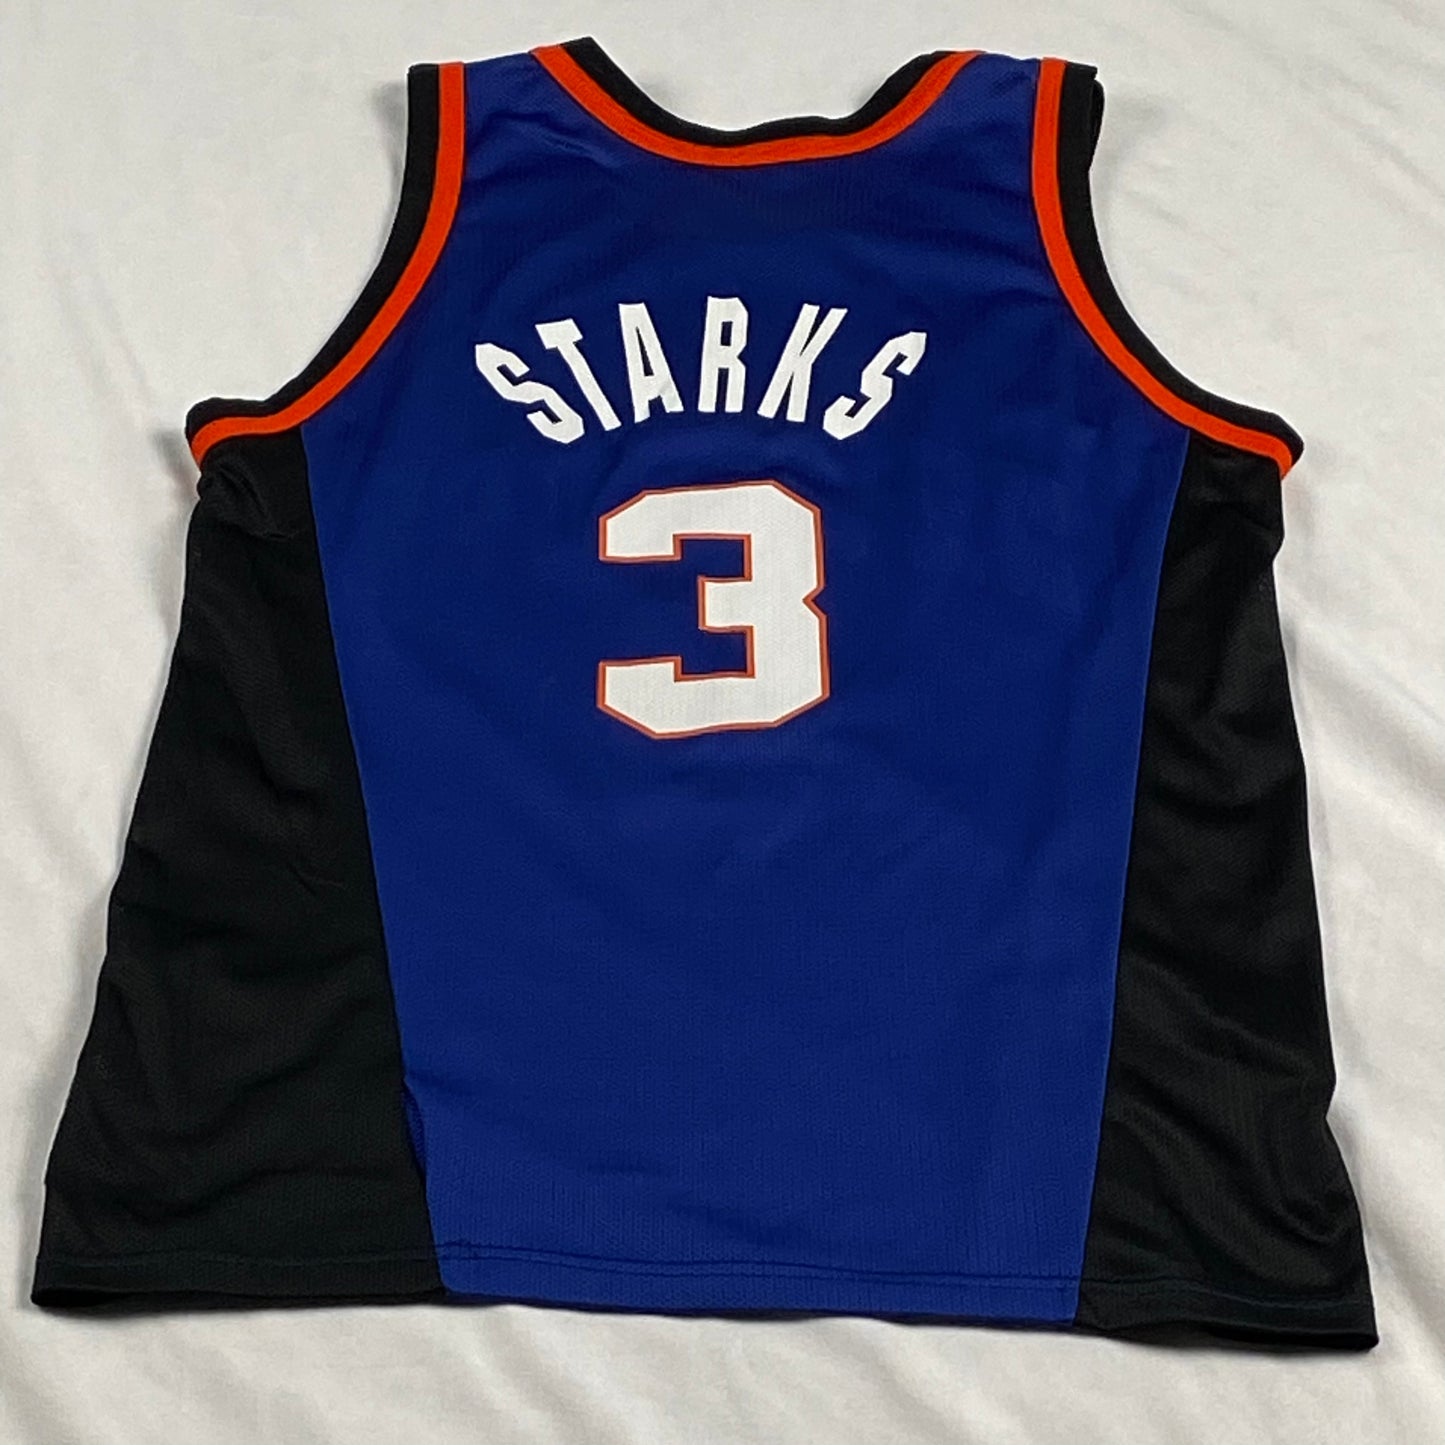 New York Knicks John Starks Champion Replica NBA Basketball Jersey